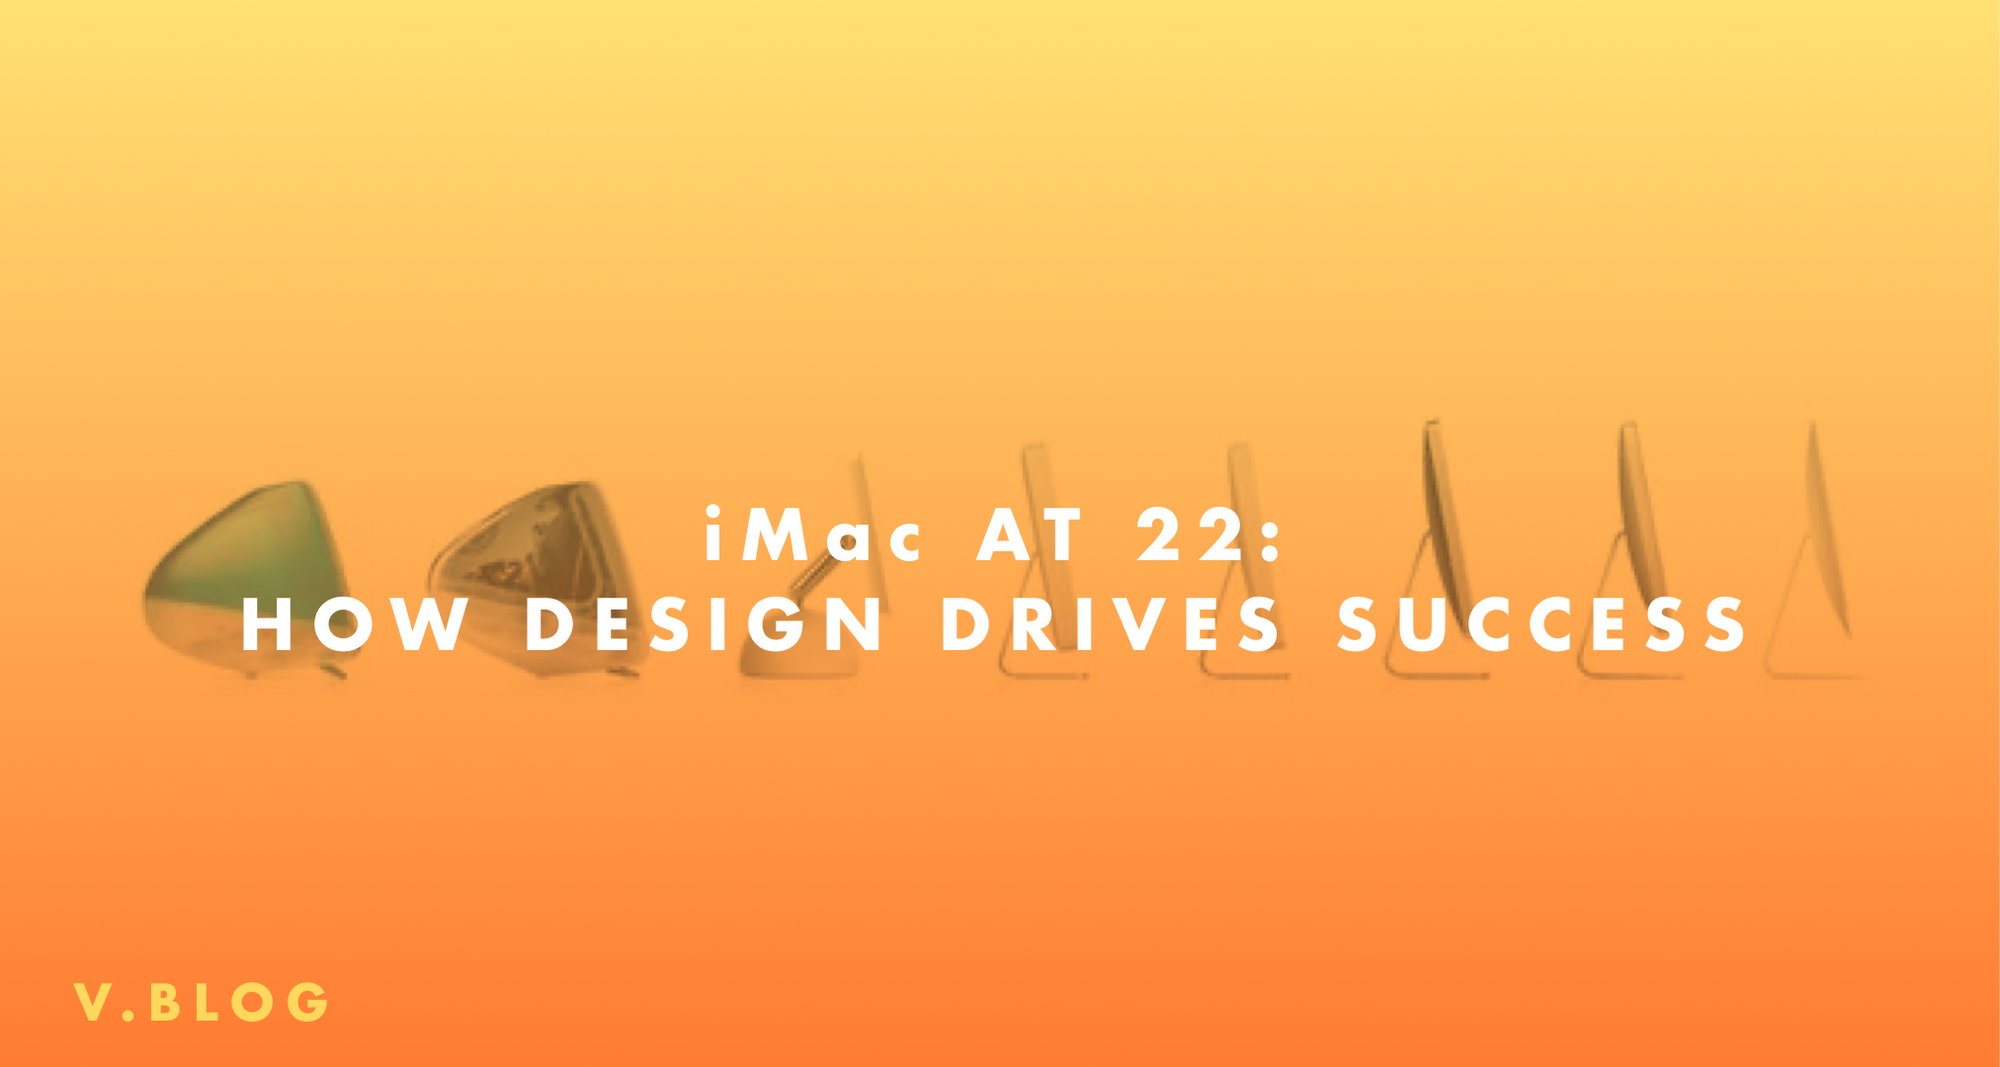 iMac at 22: How Design Drives Success